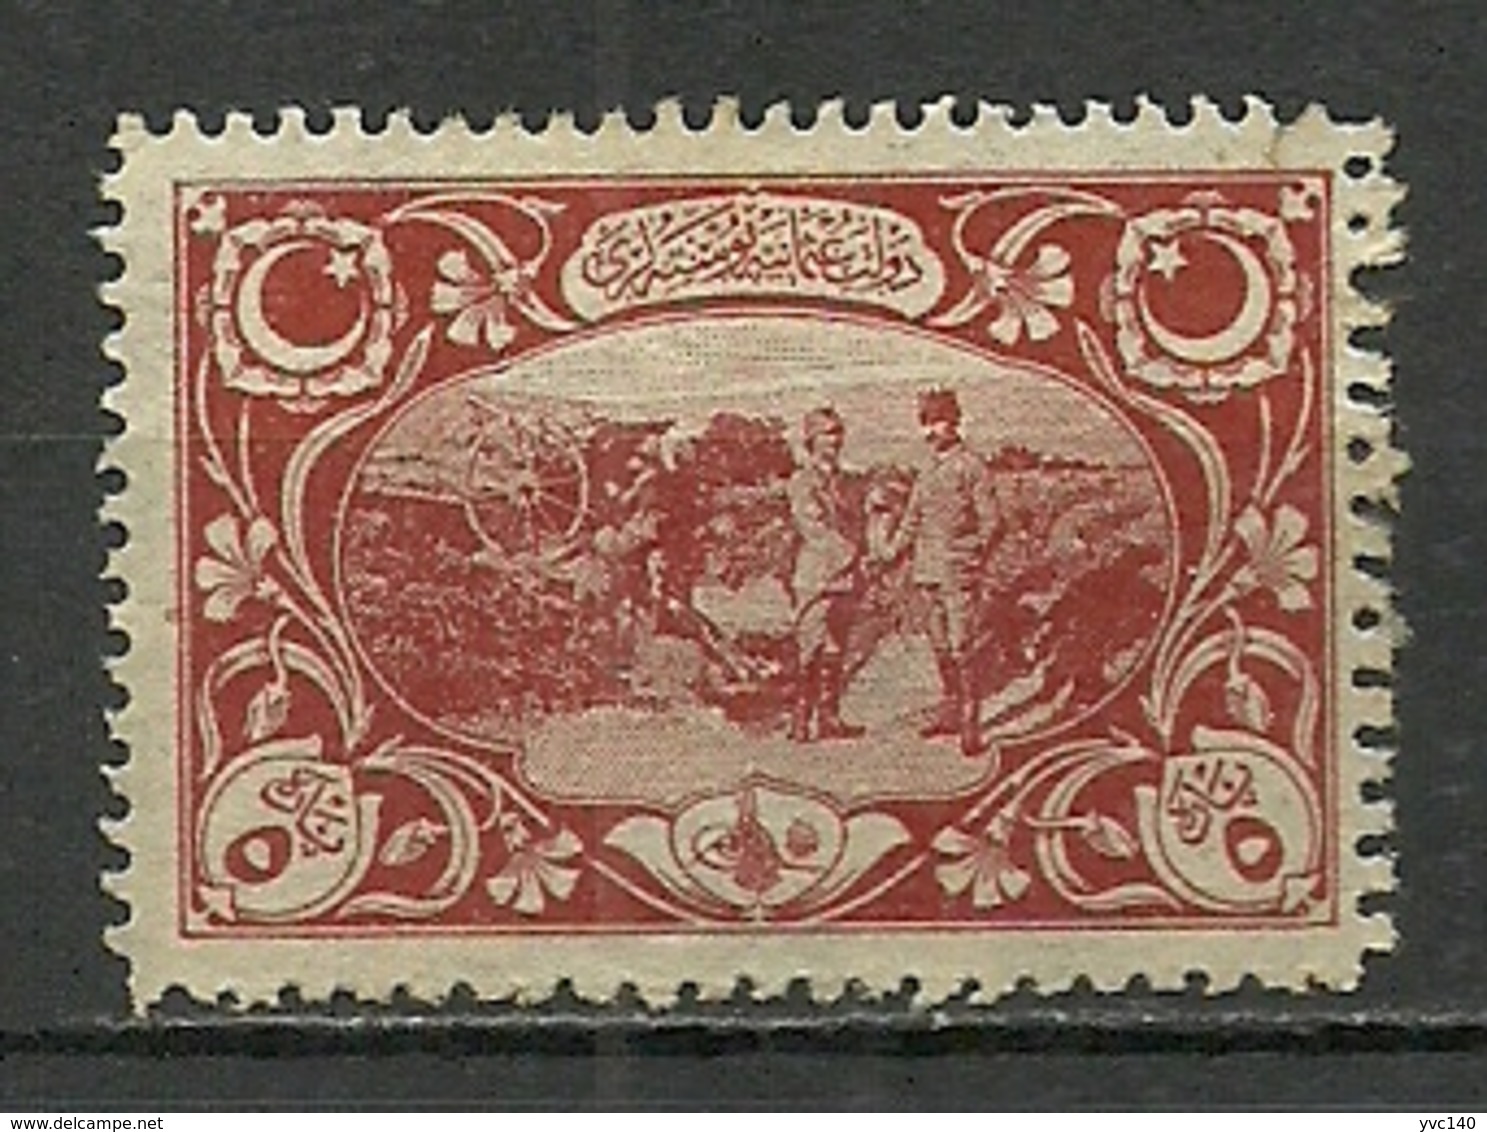 Turkey; 1917 Vienna Printing Not Issued Stamp 5 P. (Original Gum) - Unused Stamps